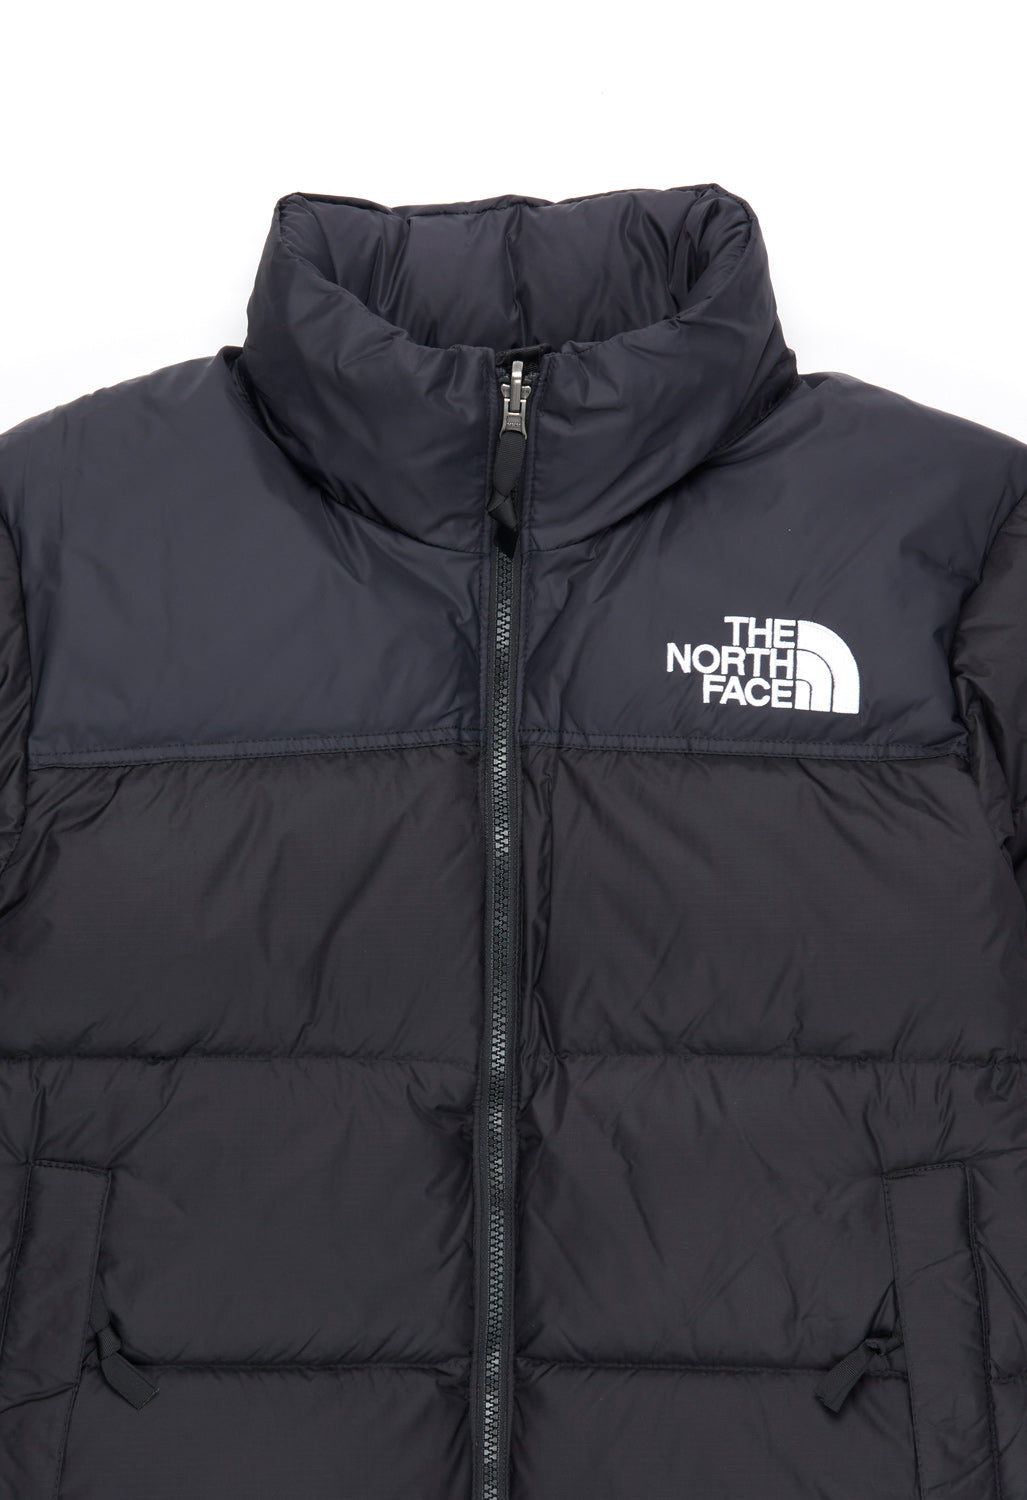 The North Face 1996 Retro Nuptse Women's Jacket - TNF Black